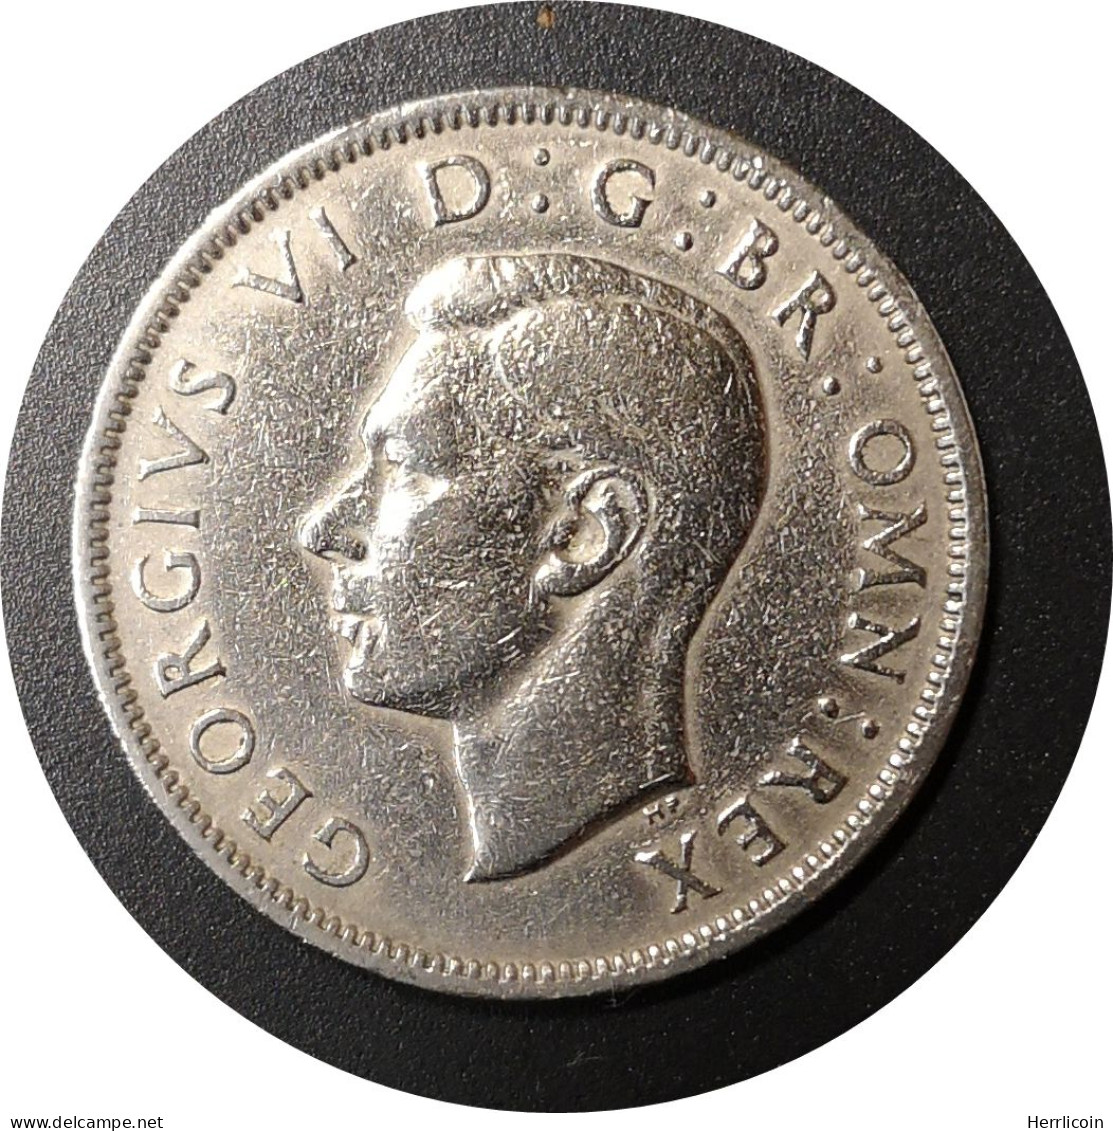 Monnaie Royaume-Uni - 1948 - 2 Shillings George VI - J. 1 Florin / 2 Shillings